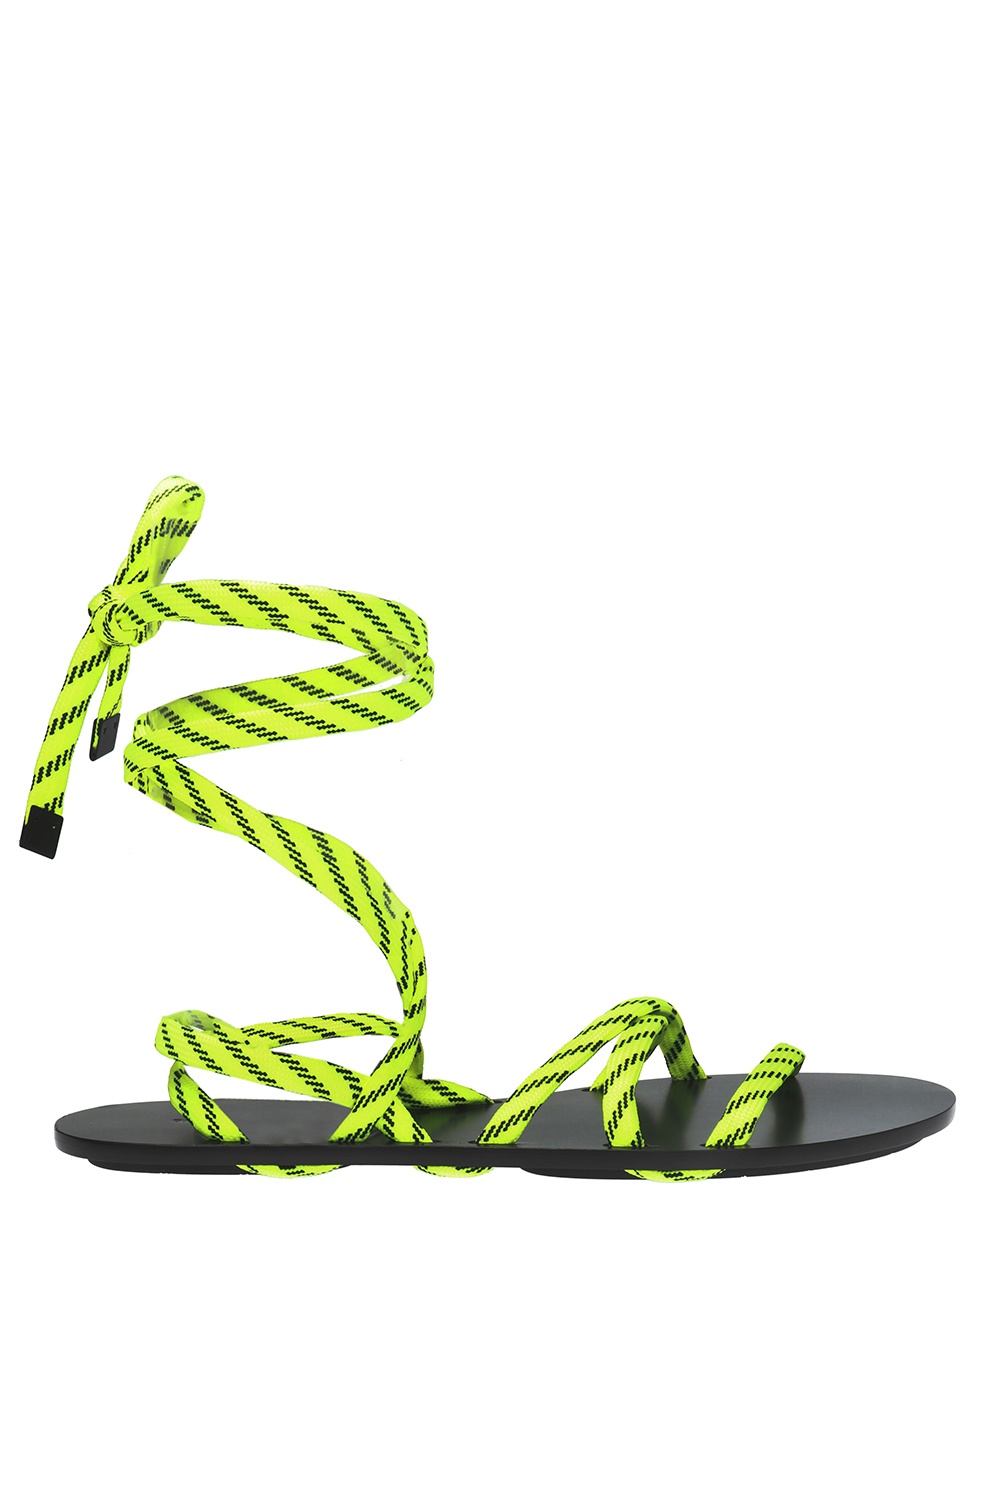 balenciaga lace up sandals